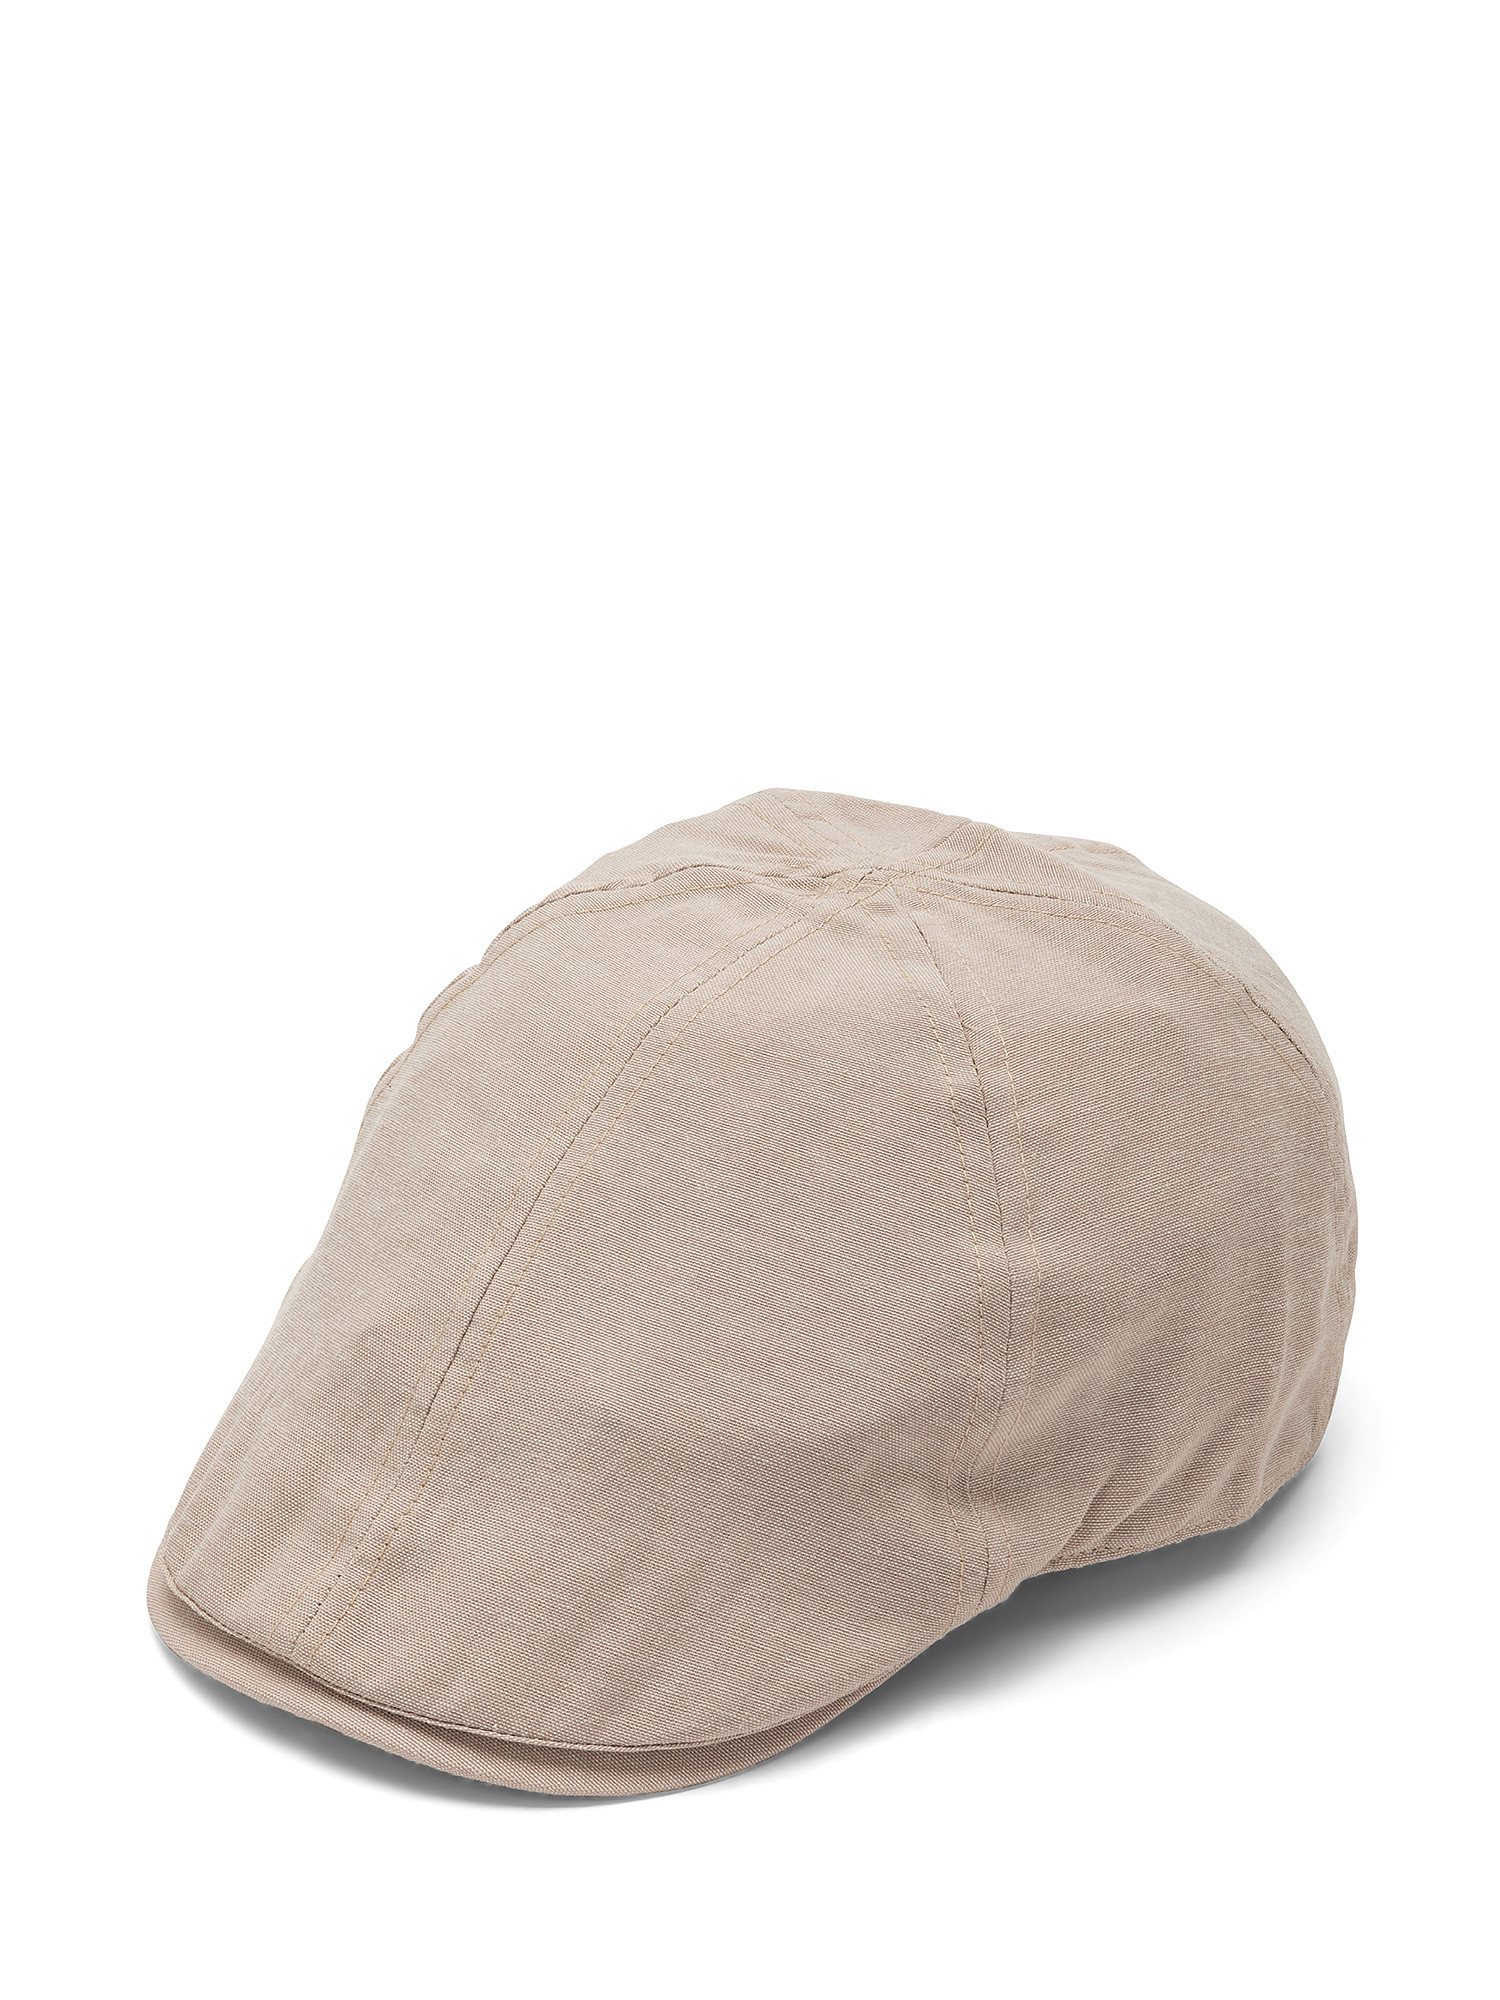 Cappello tessuto oxford tinta unita, Beige, large image number 0